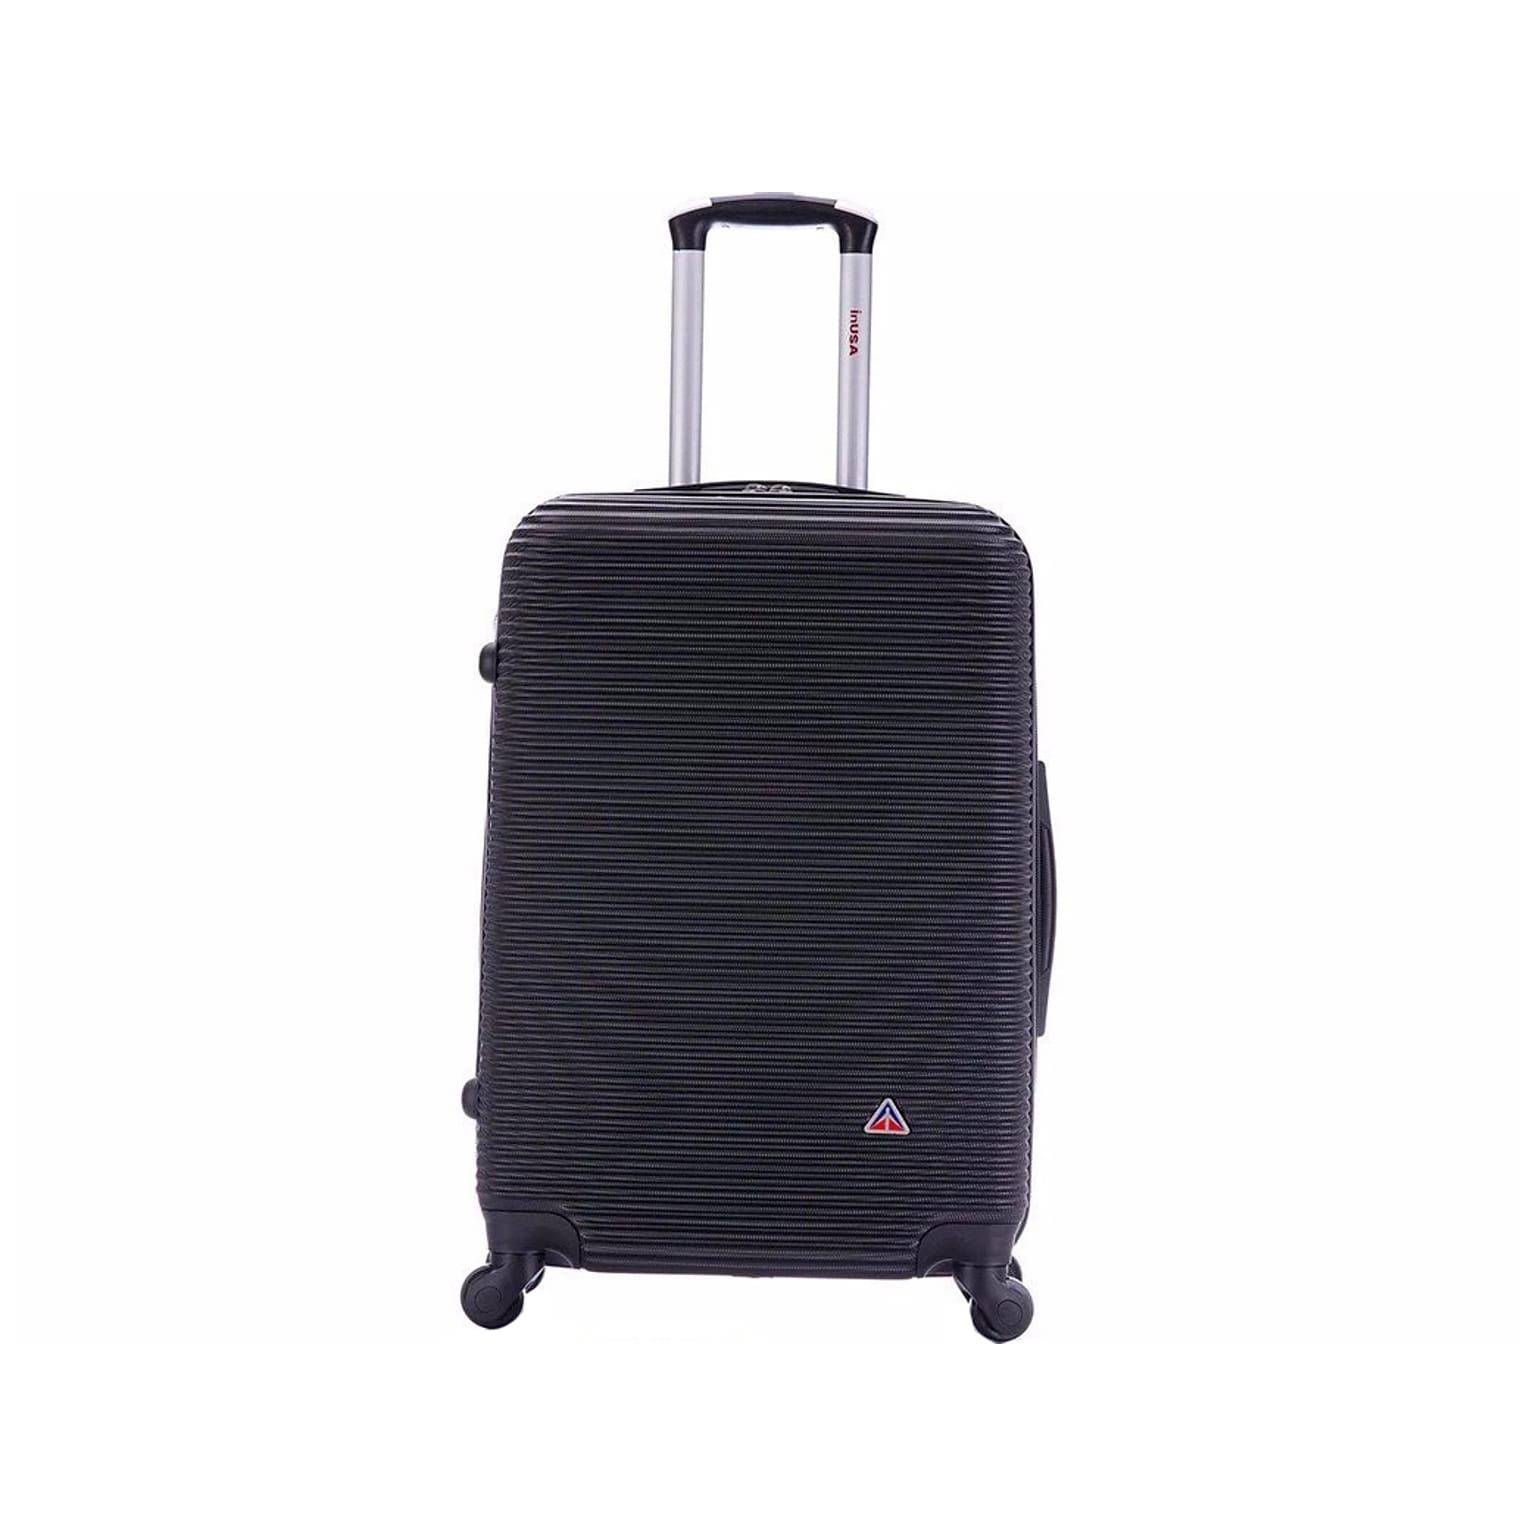 InUSA Royal 26 Hardside Suitcase, 4-Wheeled Spinner, Black (IUROY00M-BLK)